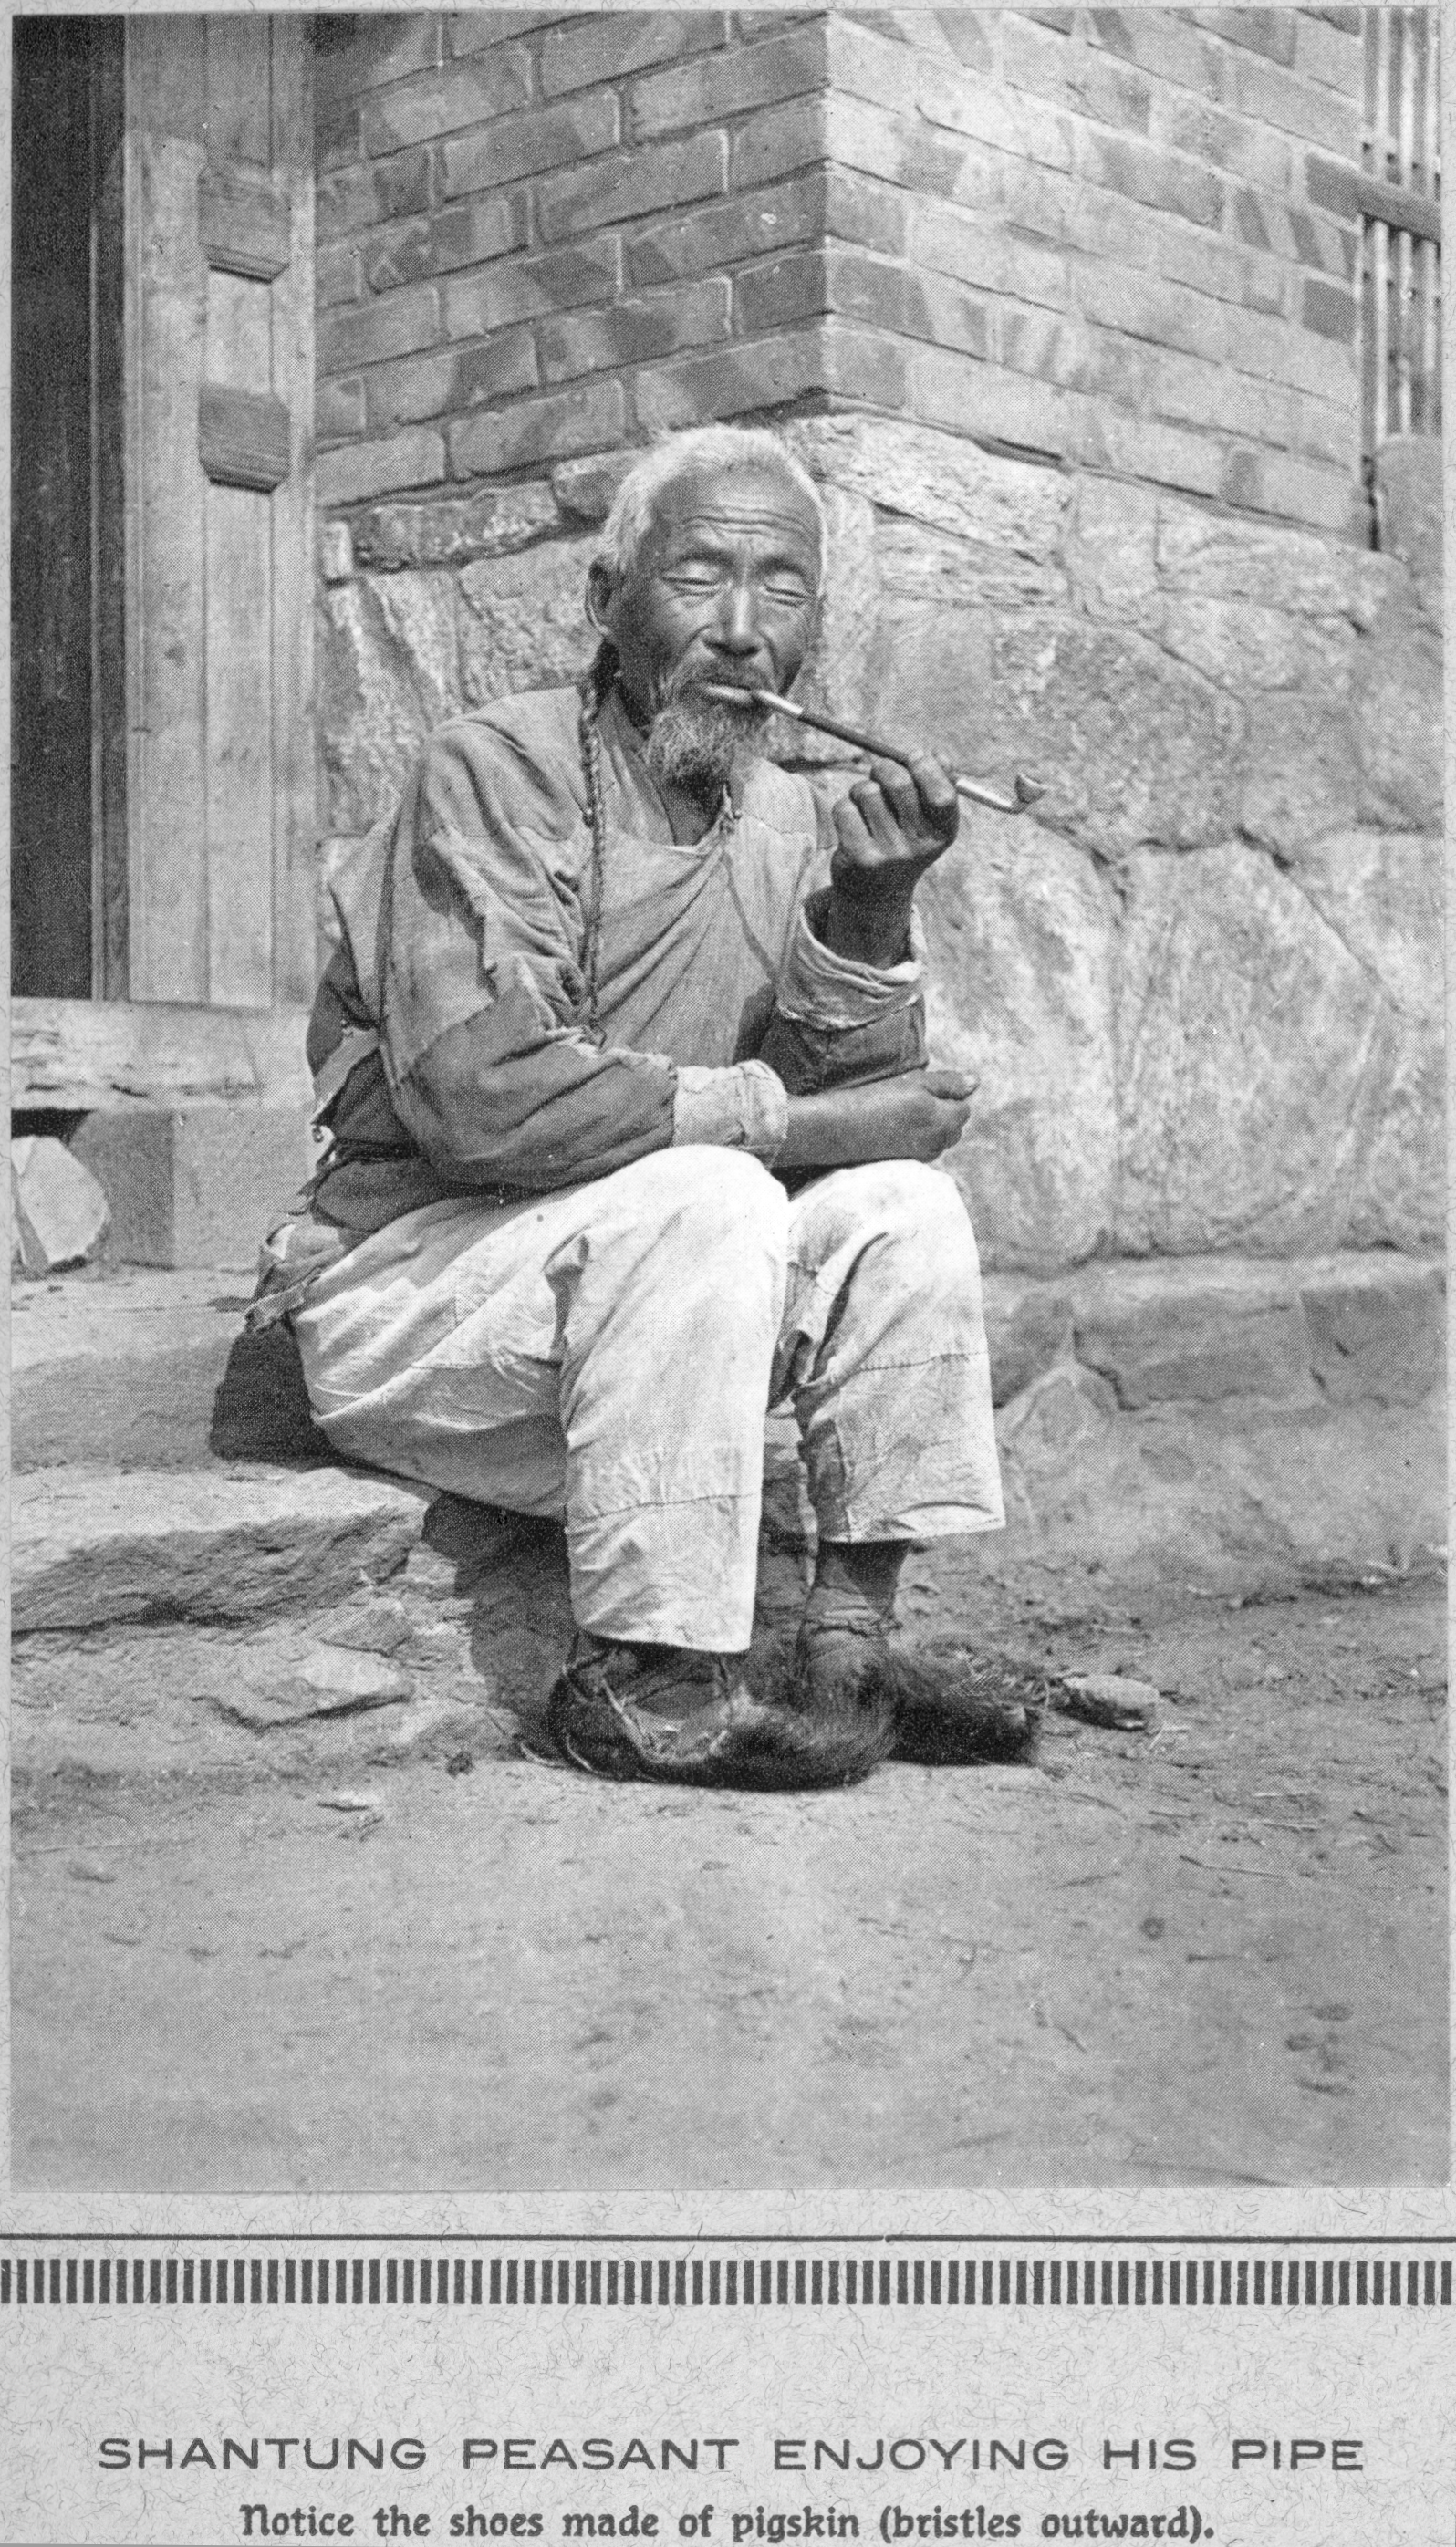 Shantung peasant enjoying his pipe